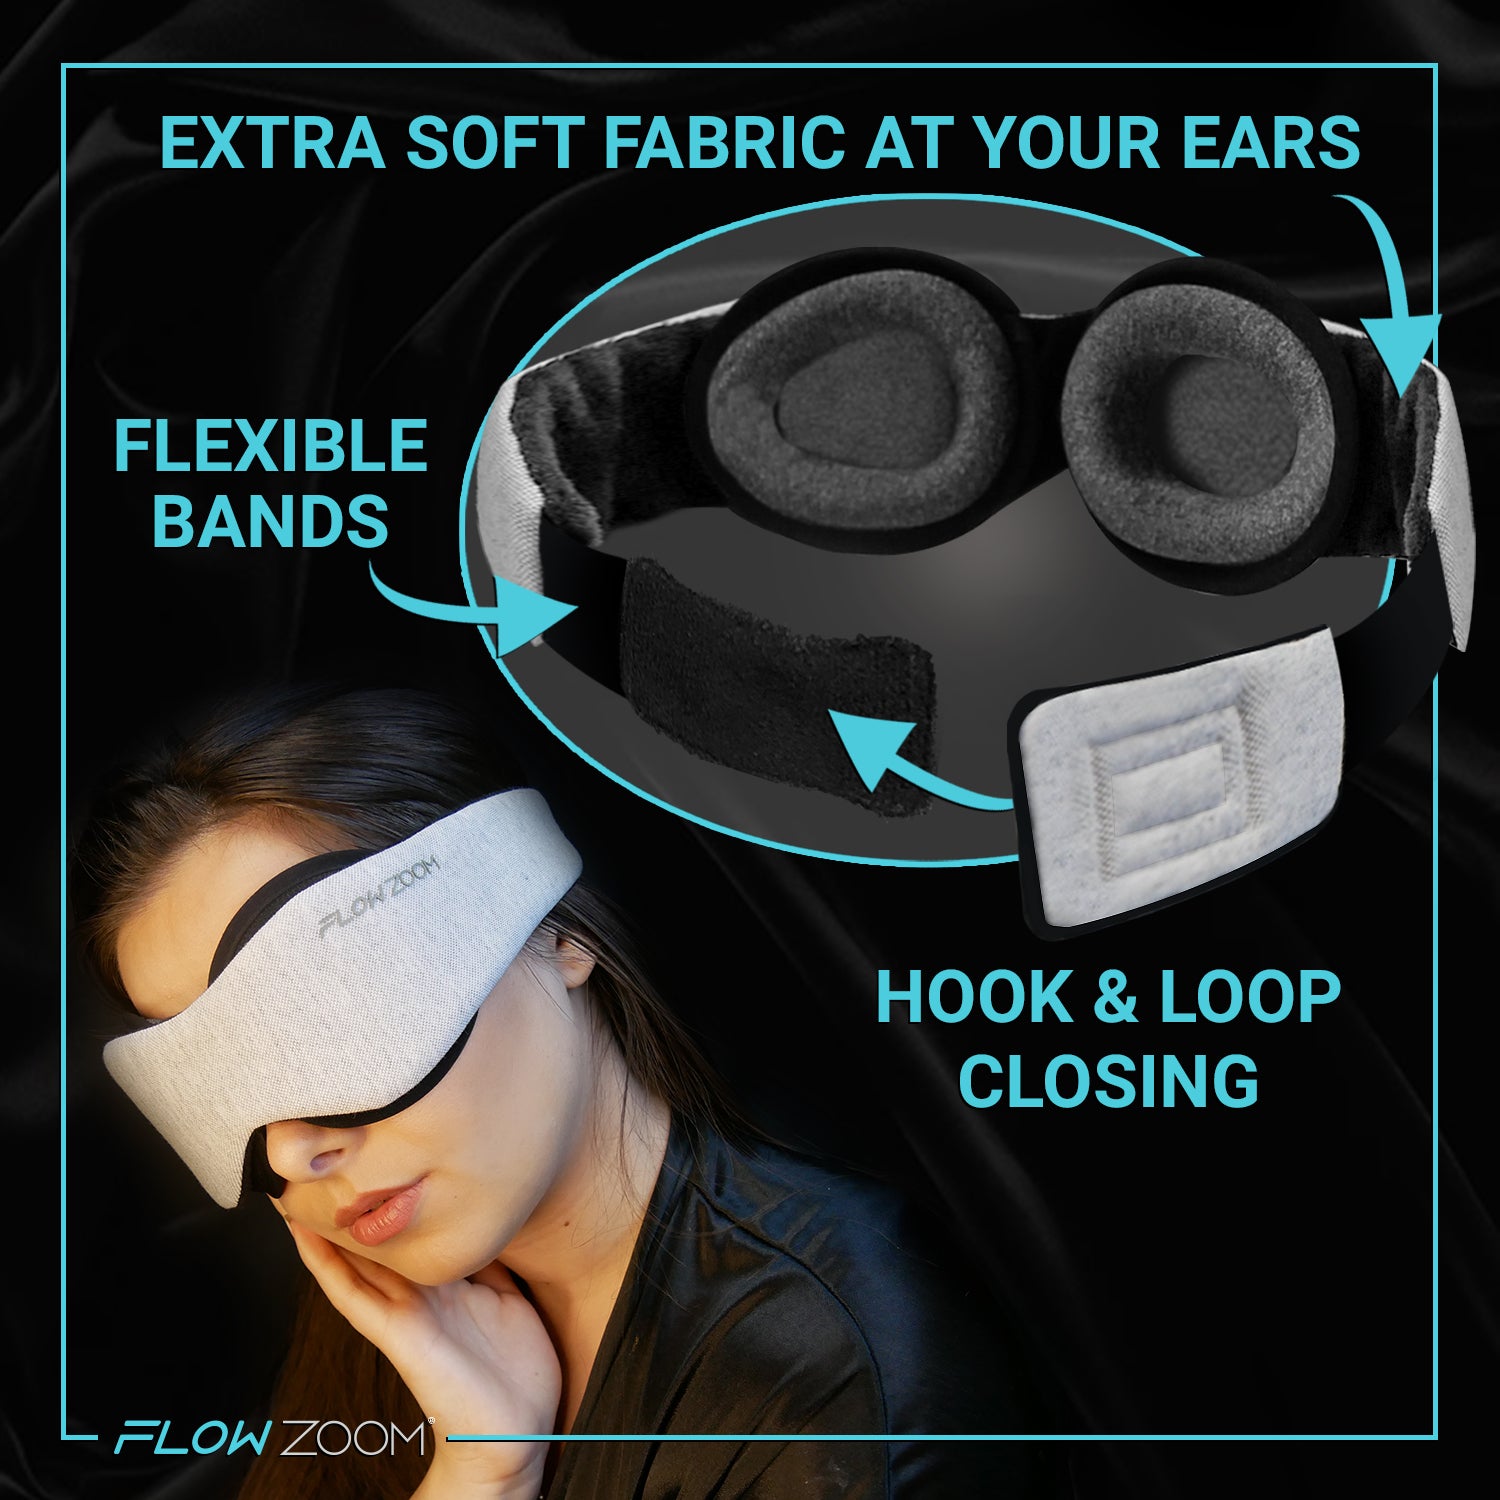 Optic Shop Pro-Sleep Blindfold Sleeping Mask - Shop Eyewear & Accessories  at H-E-B